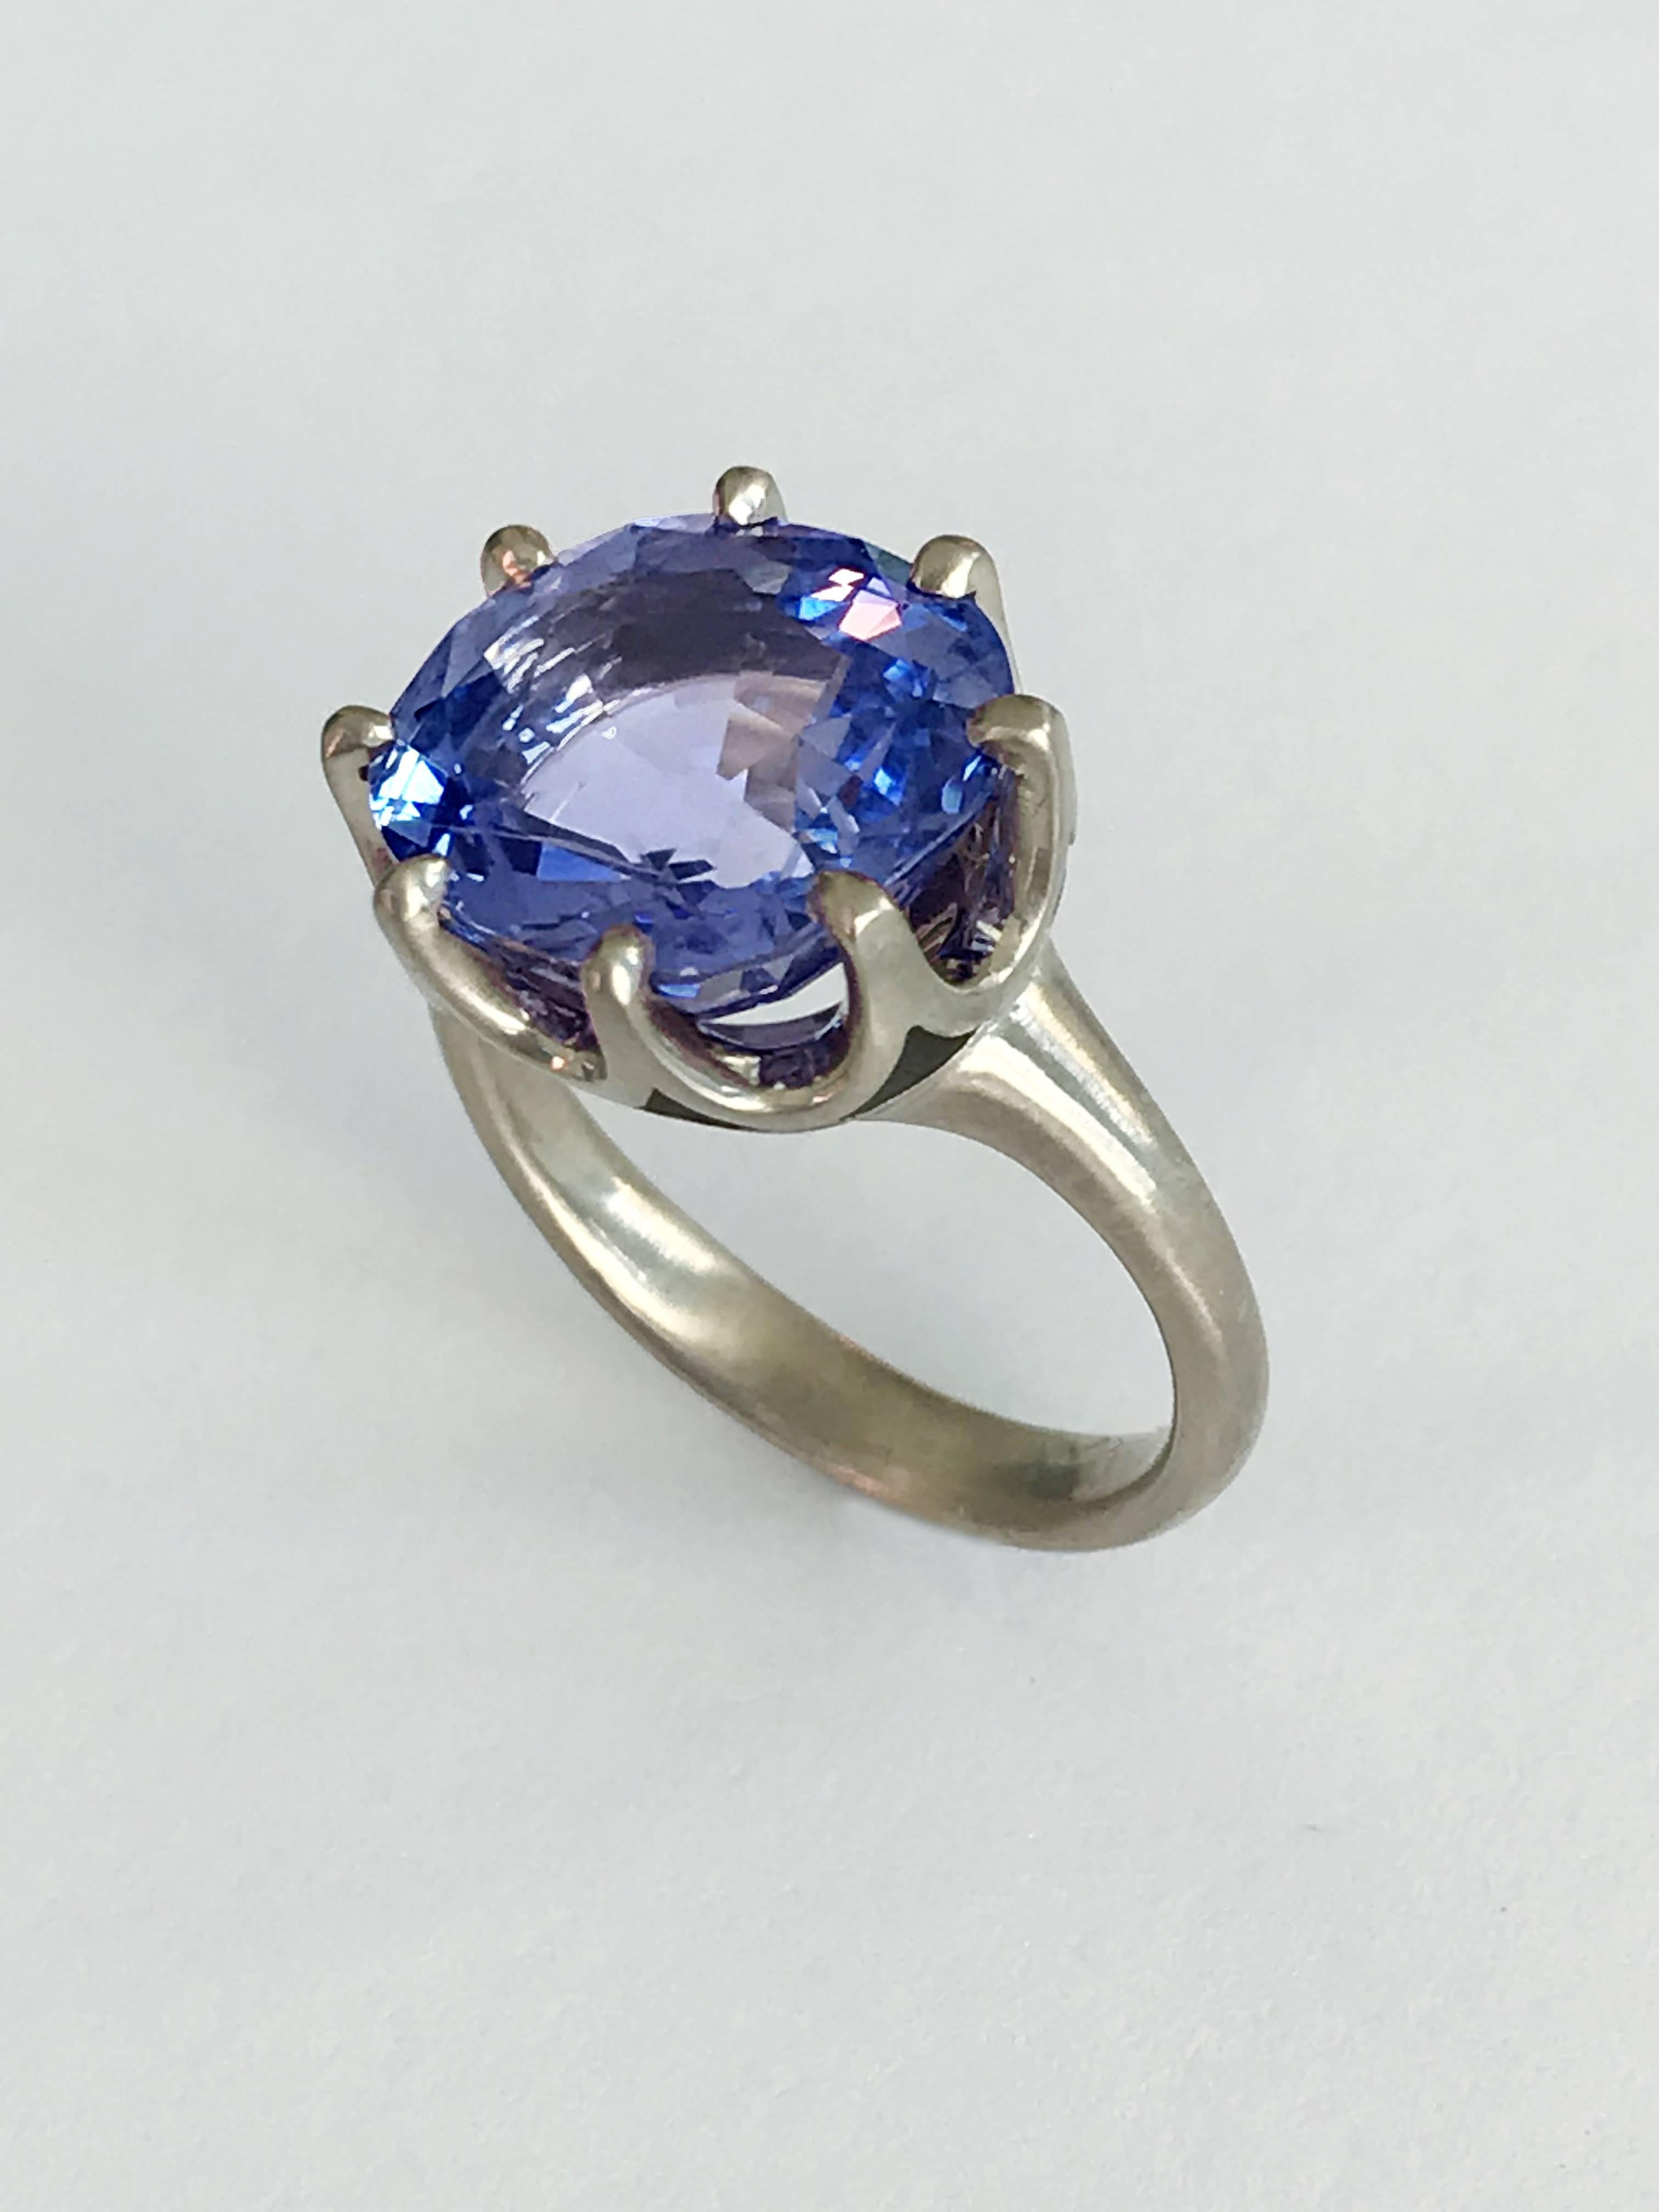 Oval Cut Dalben Natural Certified No Heat 9.37 Carat Ceylon Blue Sapphire Gold Ring